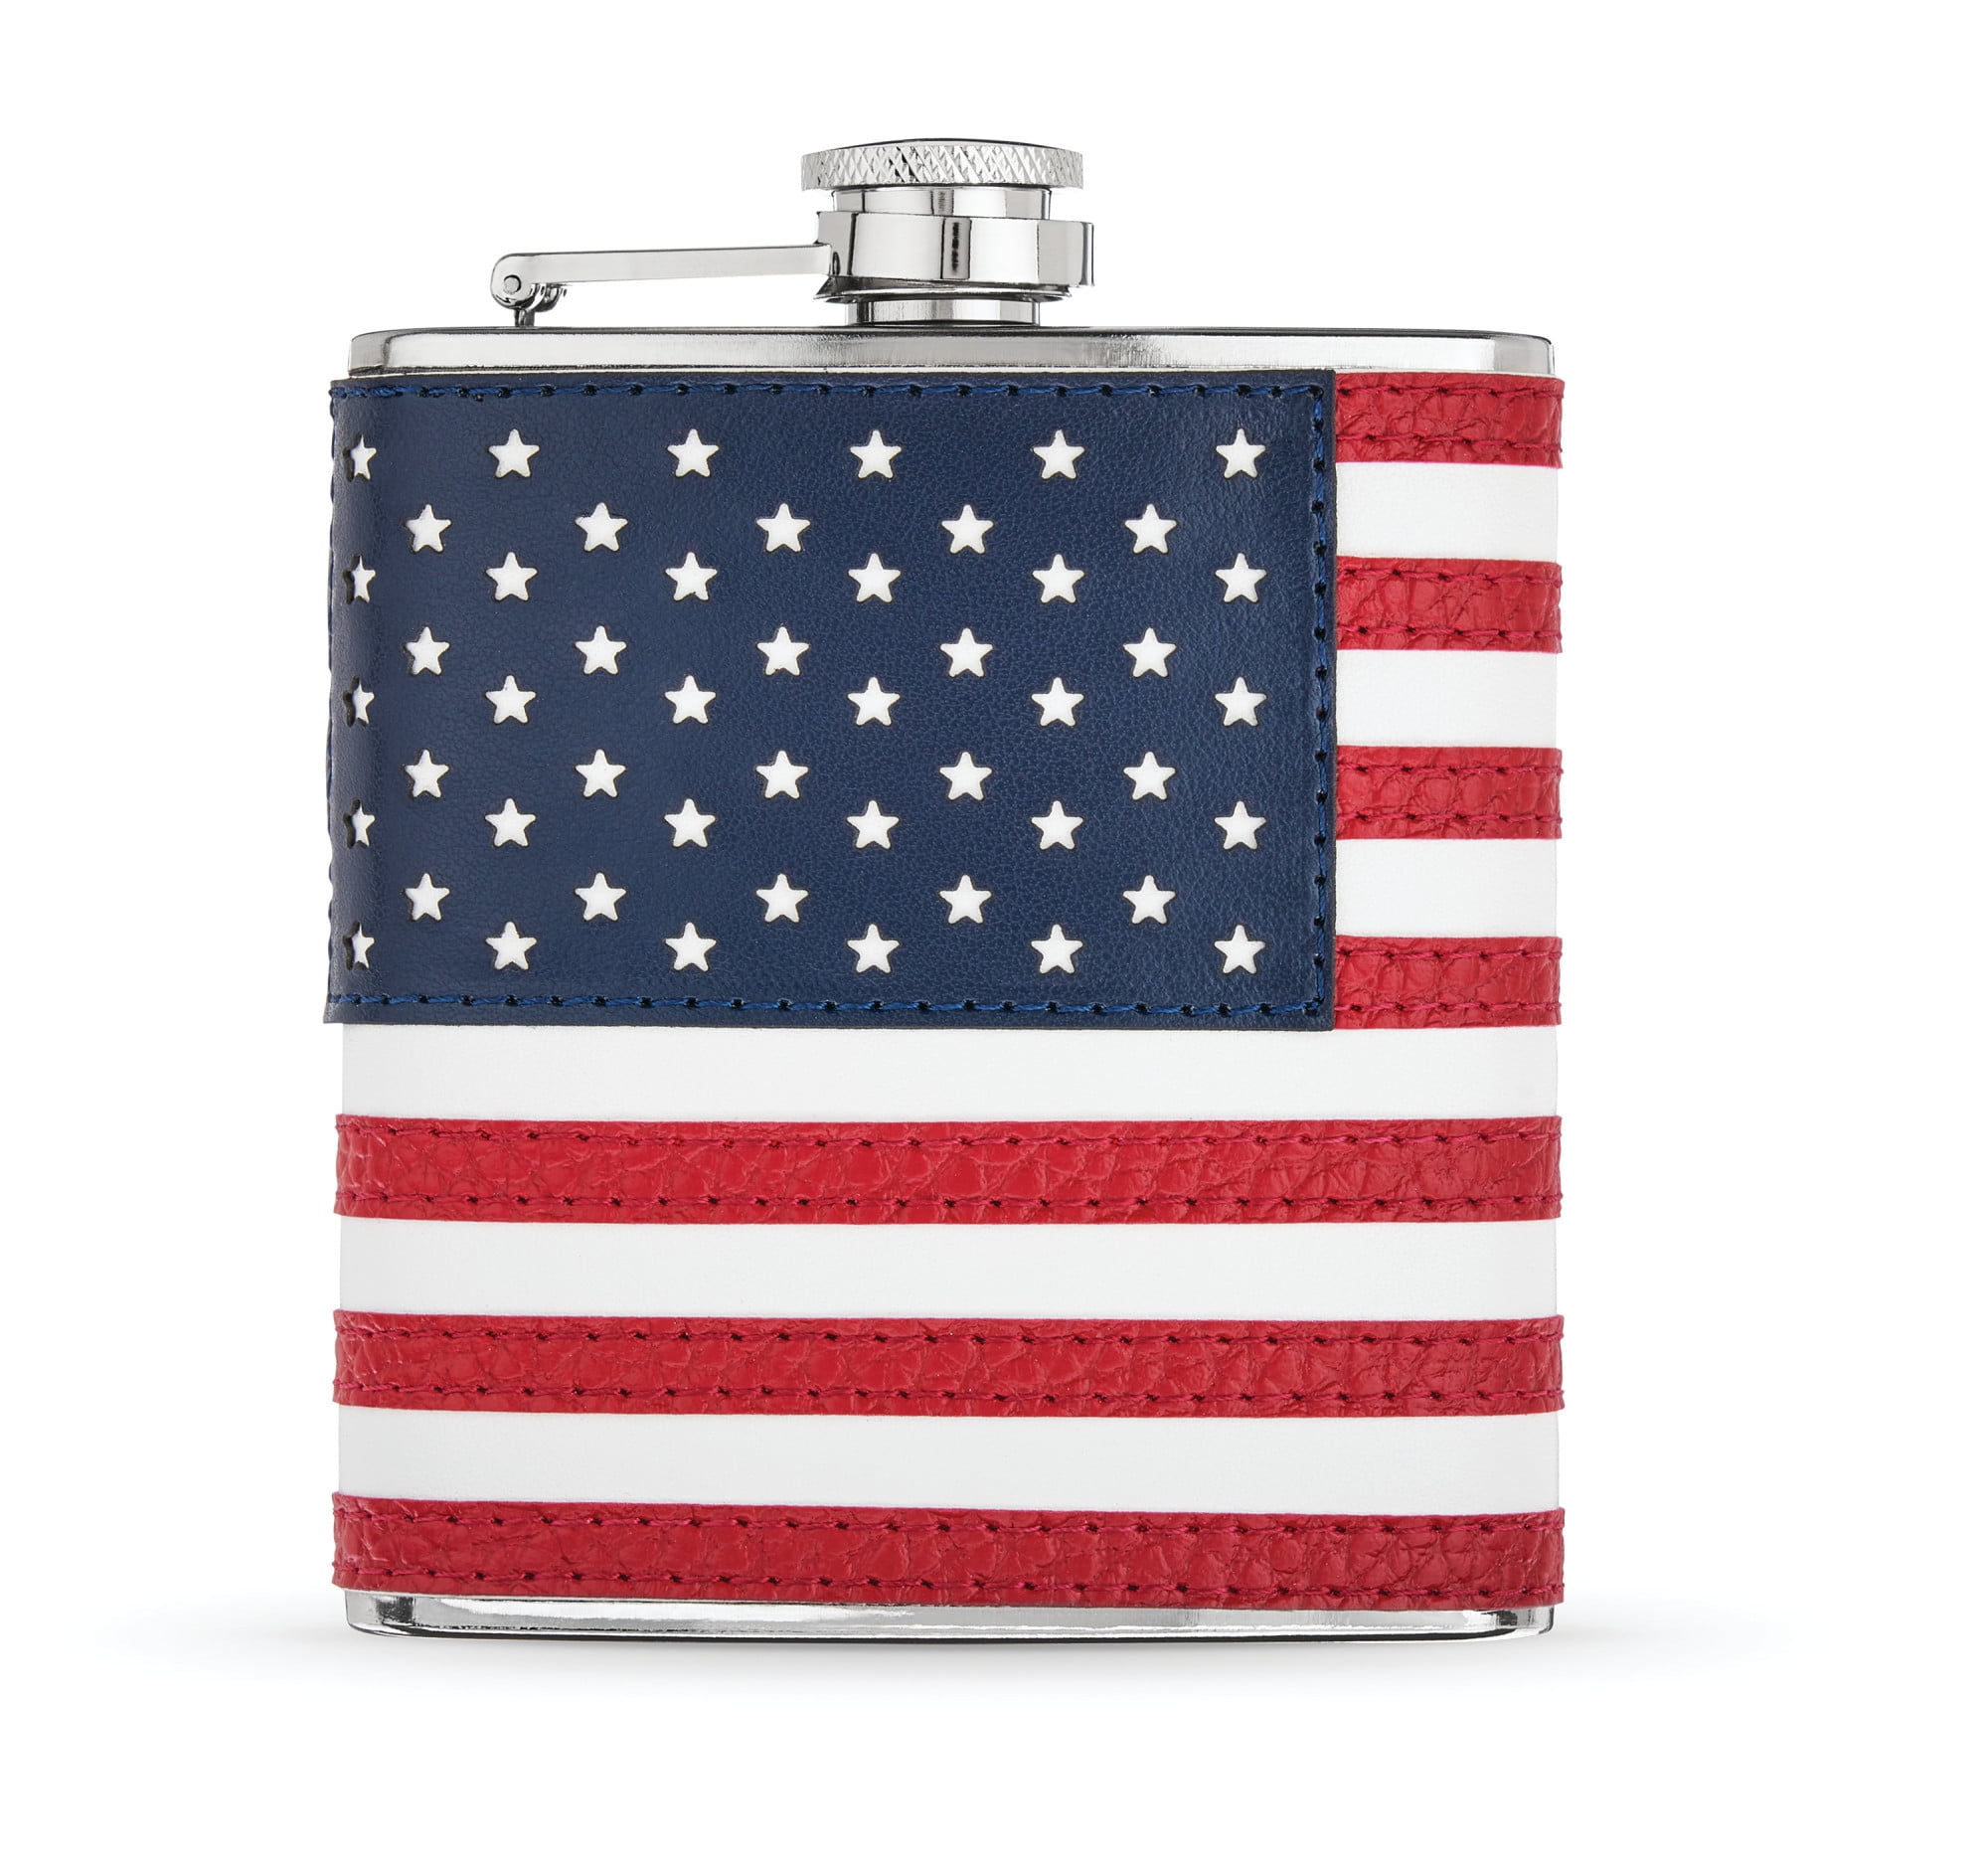 KWANITHINK Flask for Liquor for Men, American Flag Leather Hip